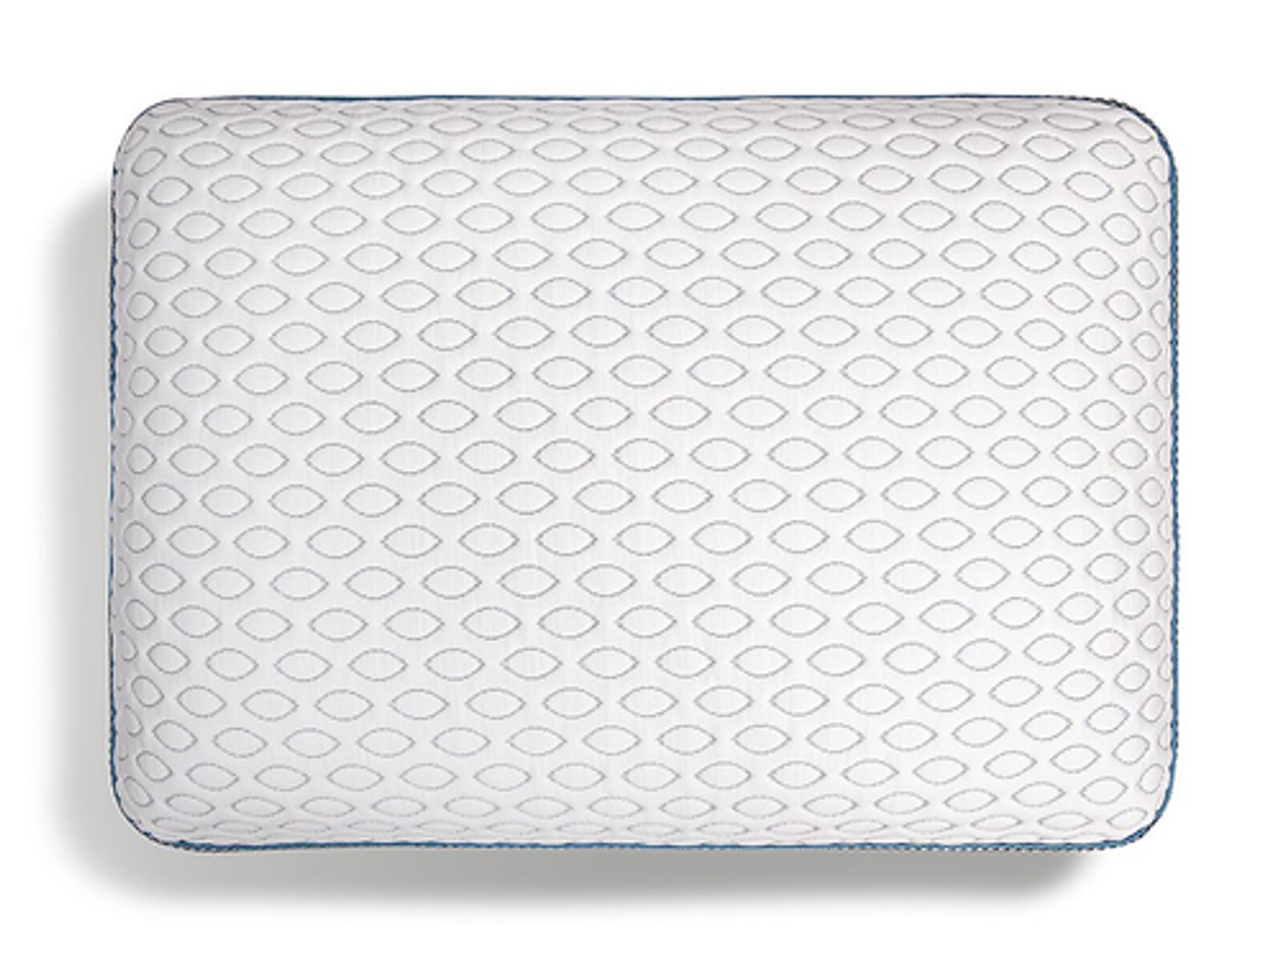 Bedgear - Frost King Pillow 2.0 - White